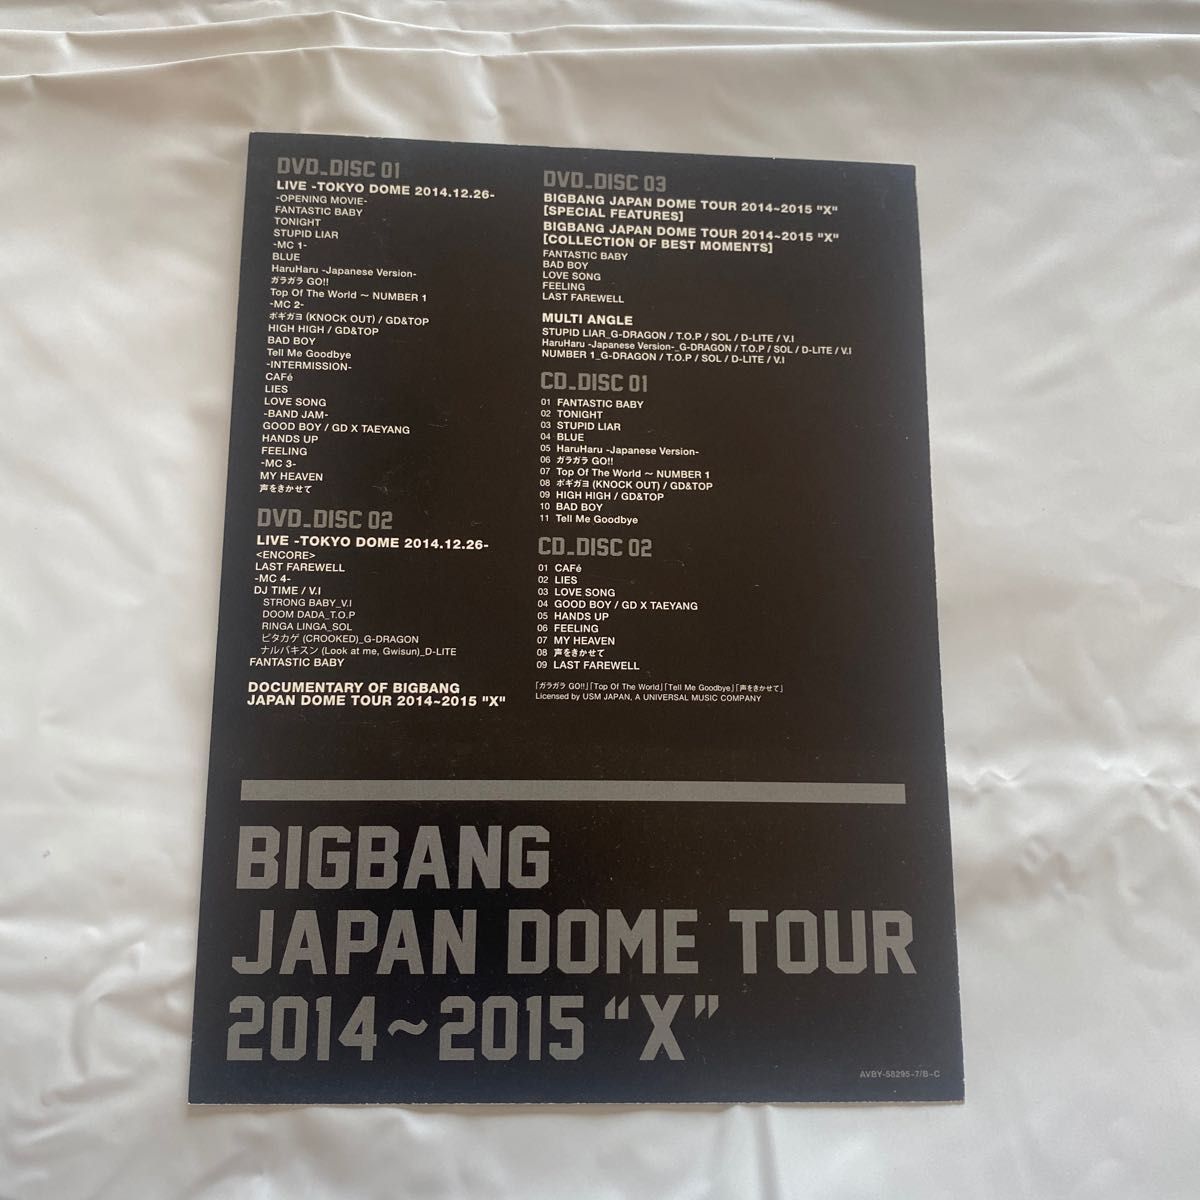 BIGBANG JAPAN DOME TOUR 2014~2015 “X -DELUXE EDITION- 